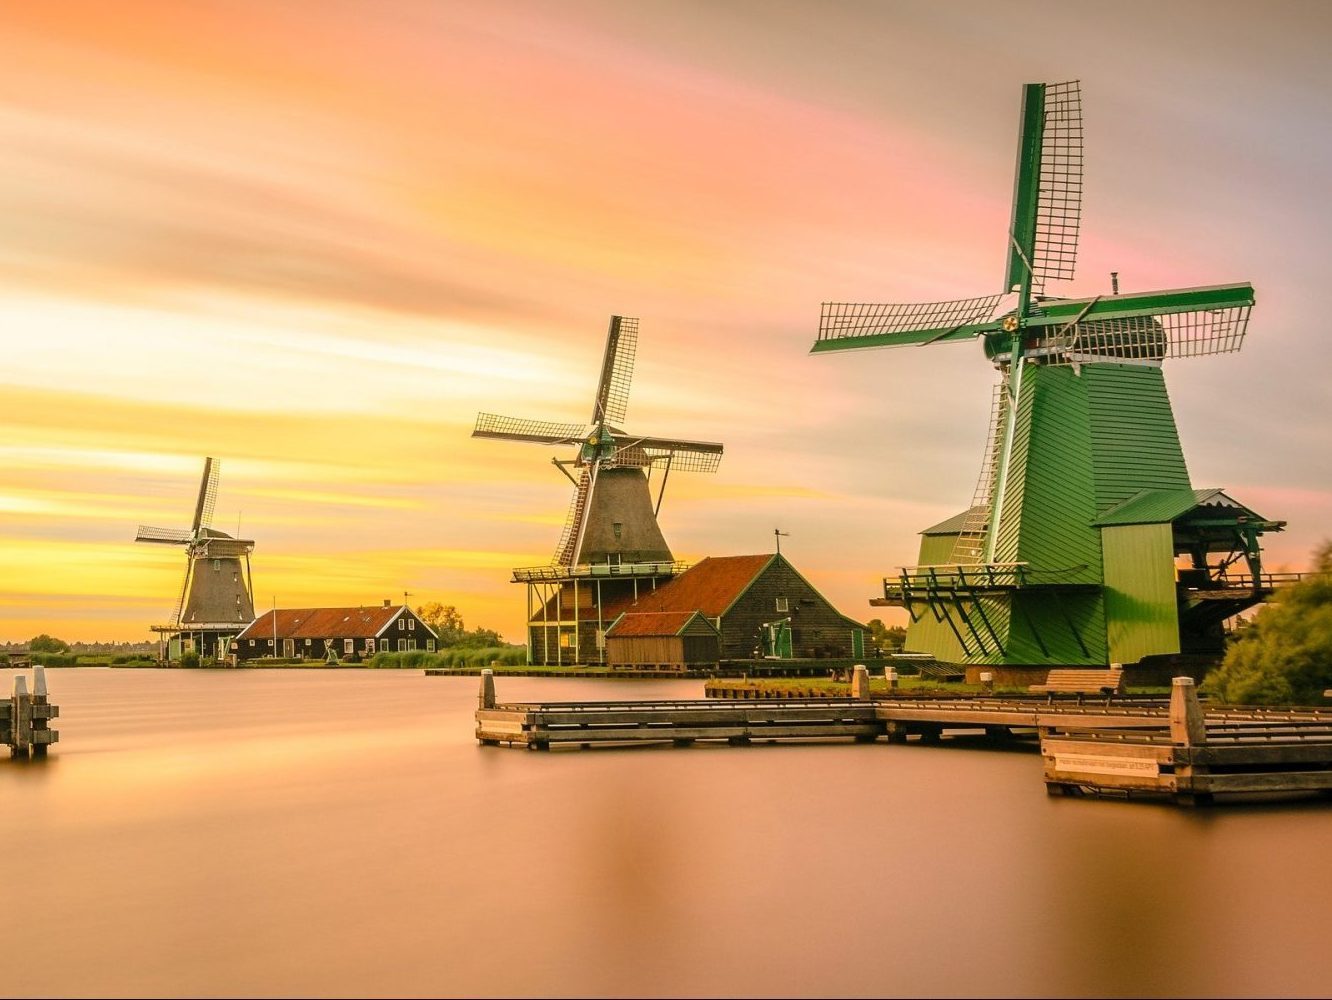 windmill day trip amsterdam